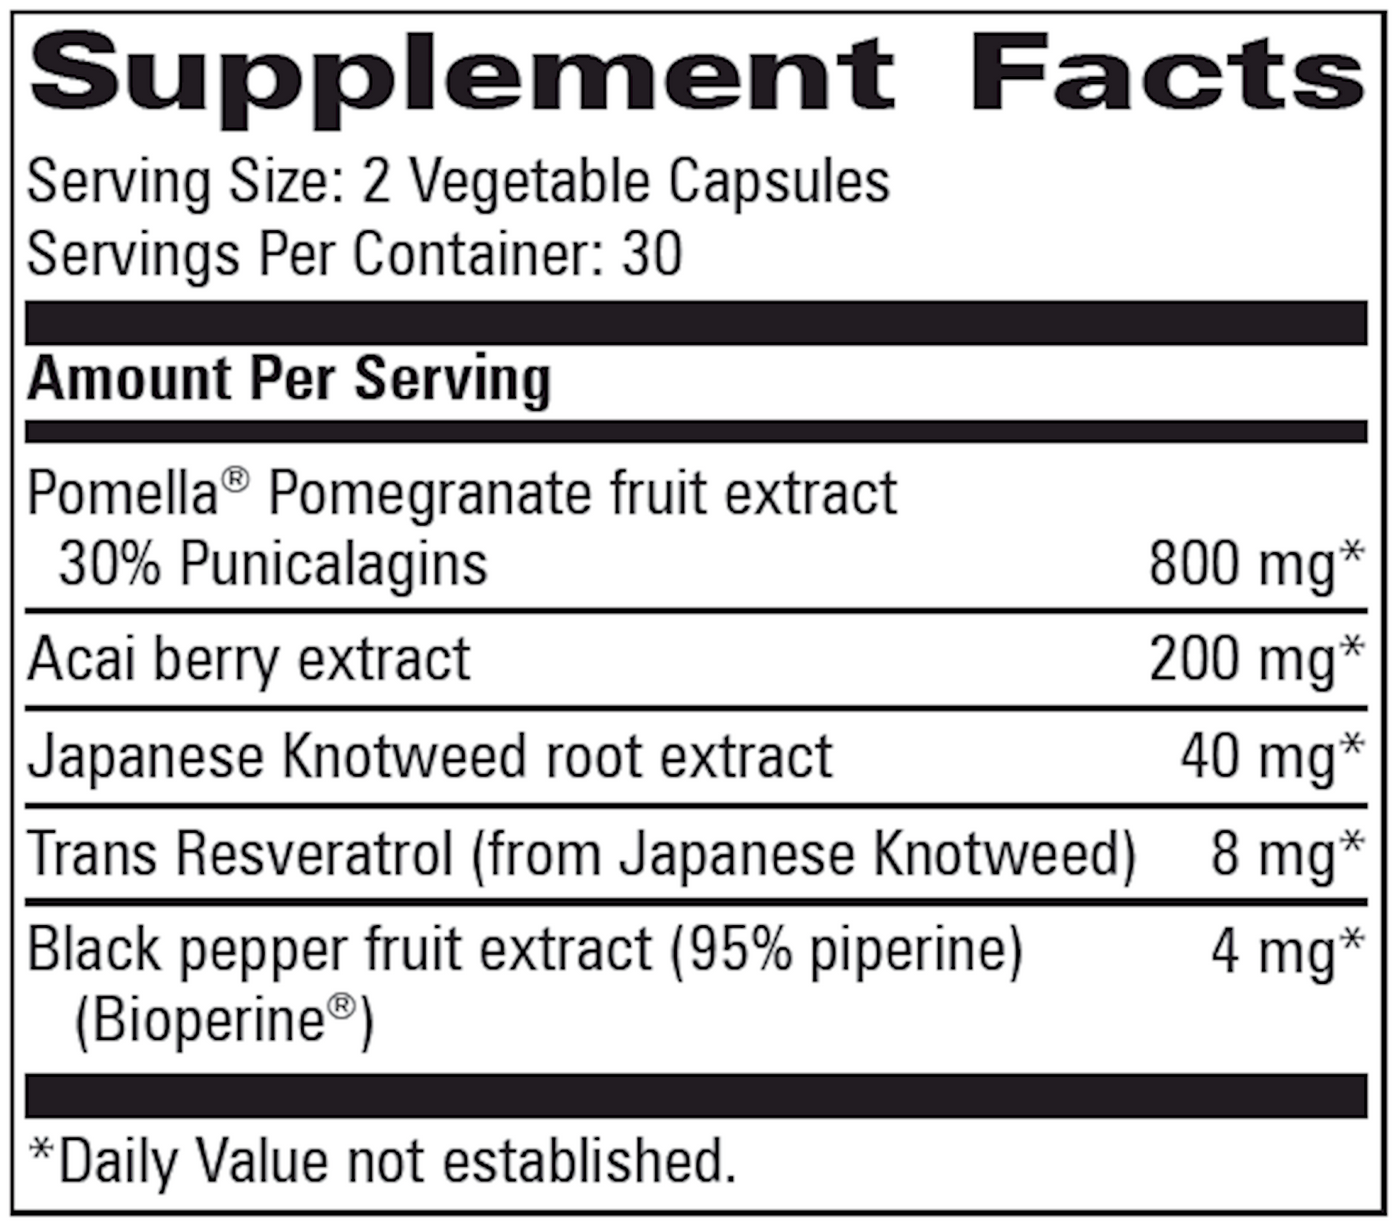 Pomegranate w/ Super Fruits  Curated Wellness